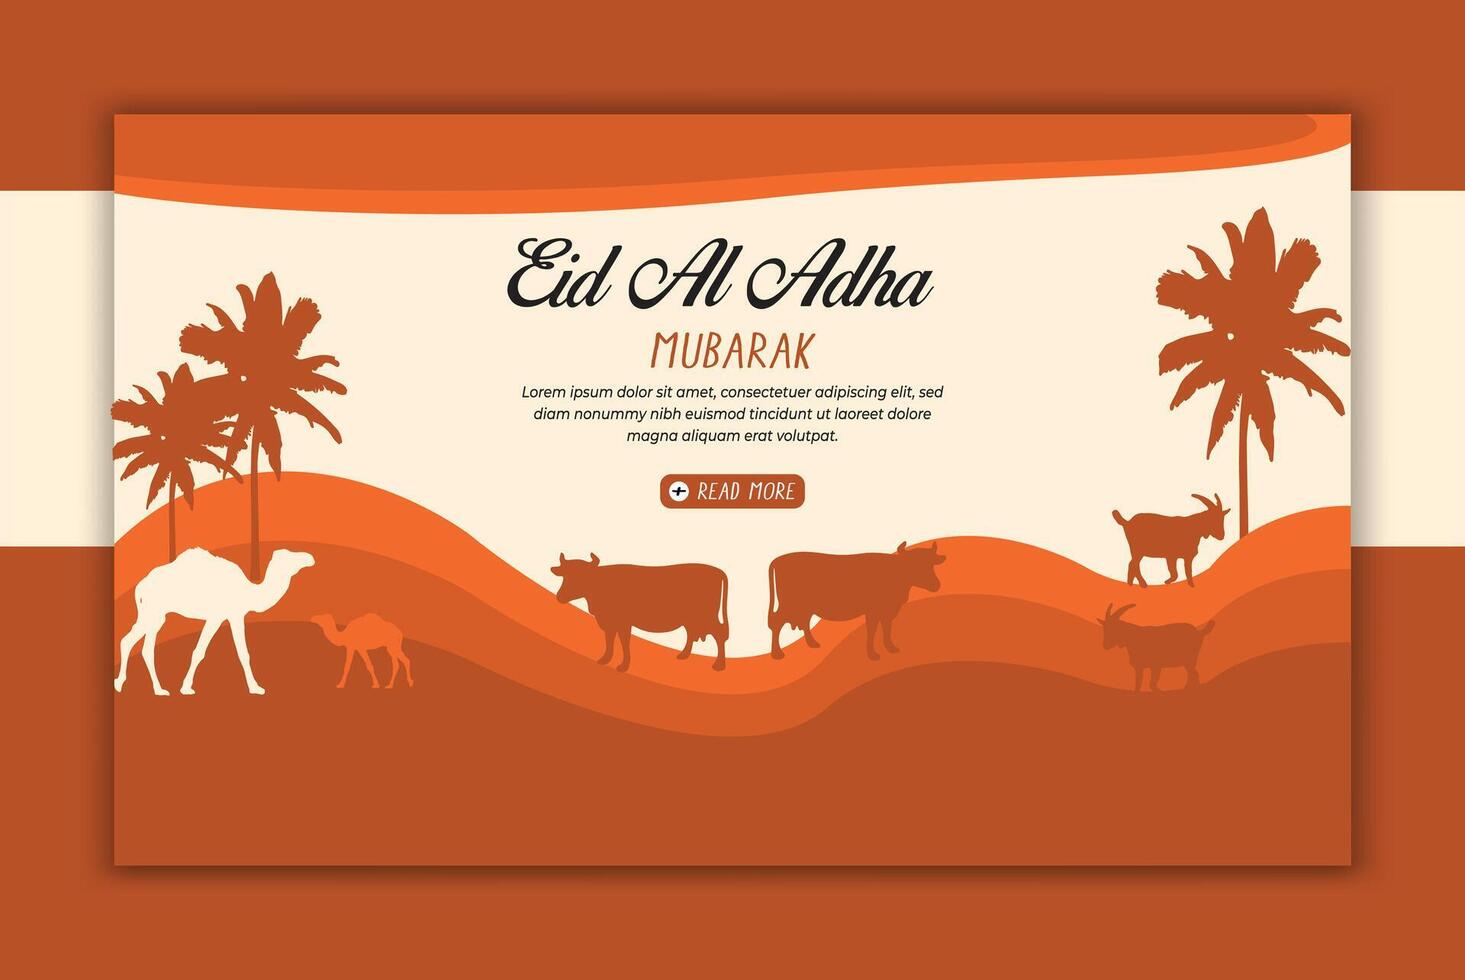 Eid al adha mubarak islamic festival social media banner post template vector